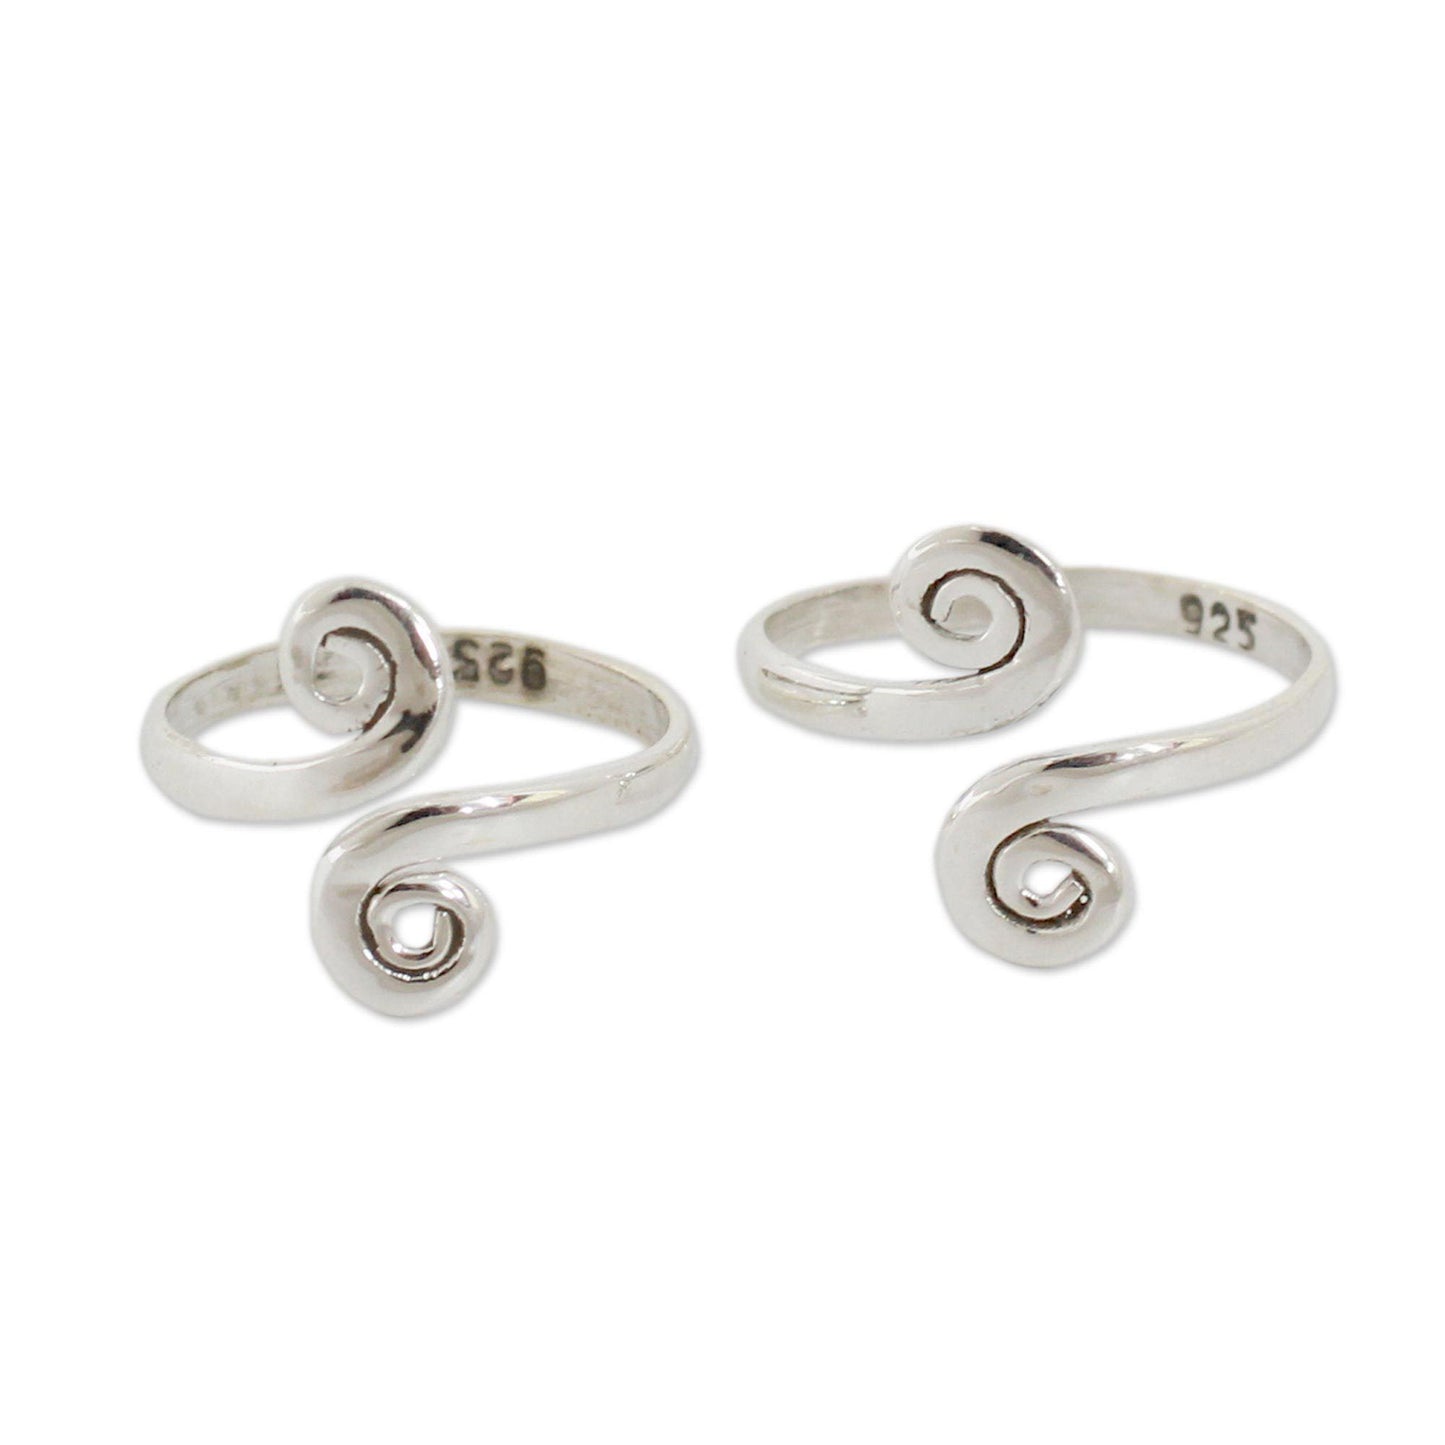 Sterling Silver Spiral Adjustable Toe Rings - Set of 2